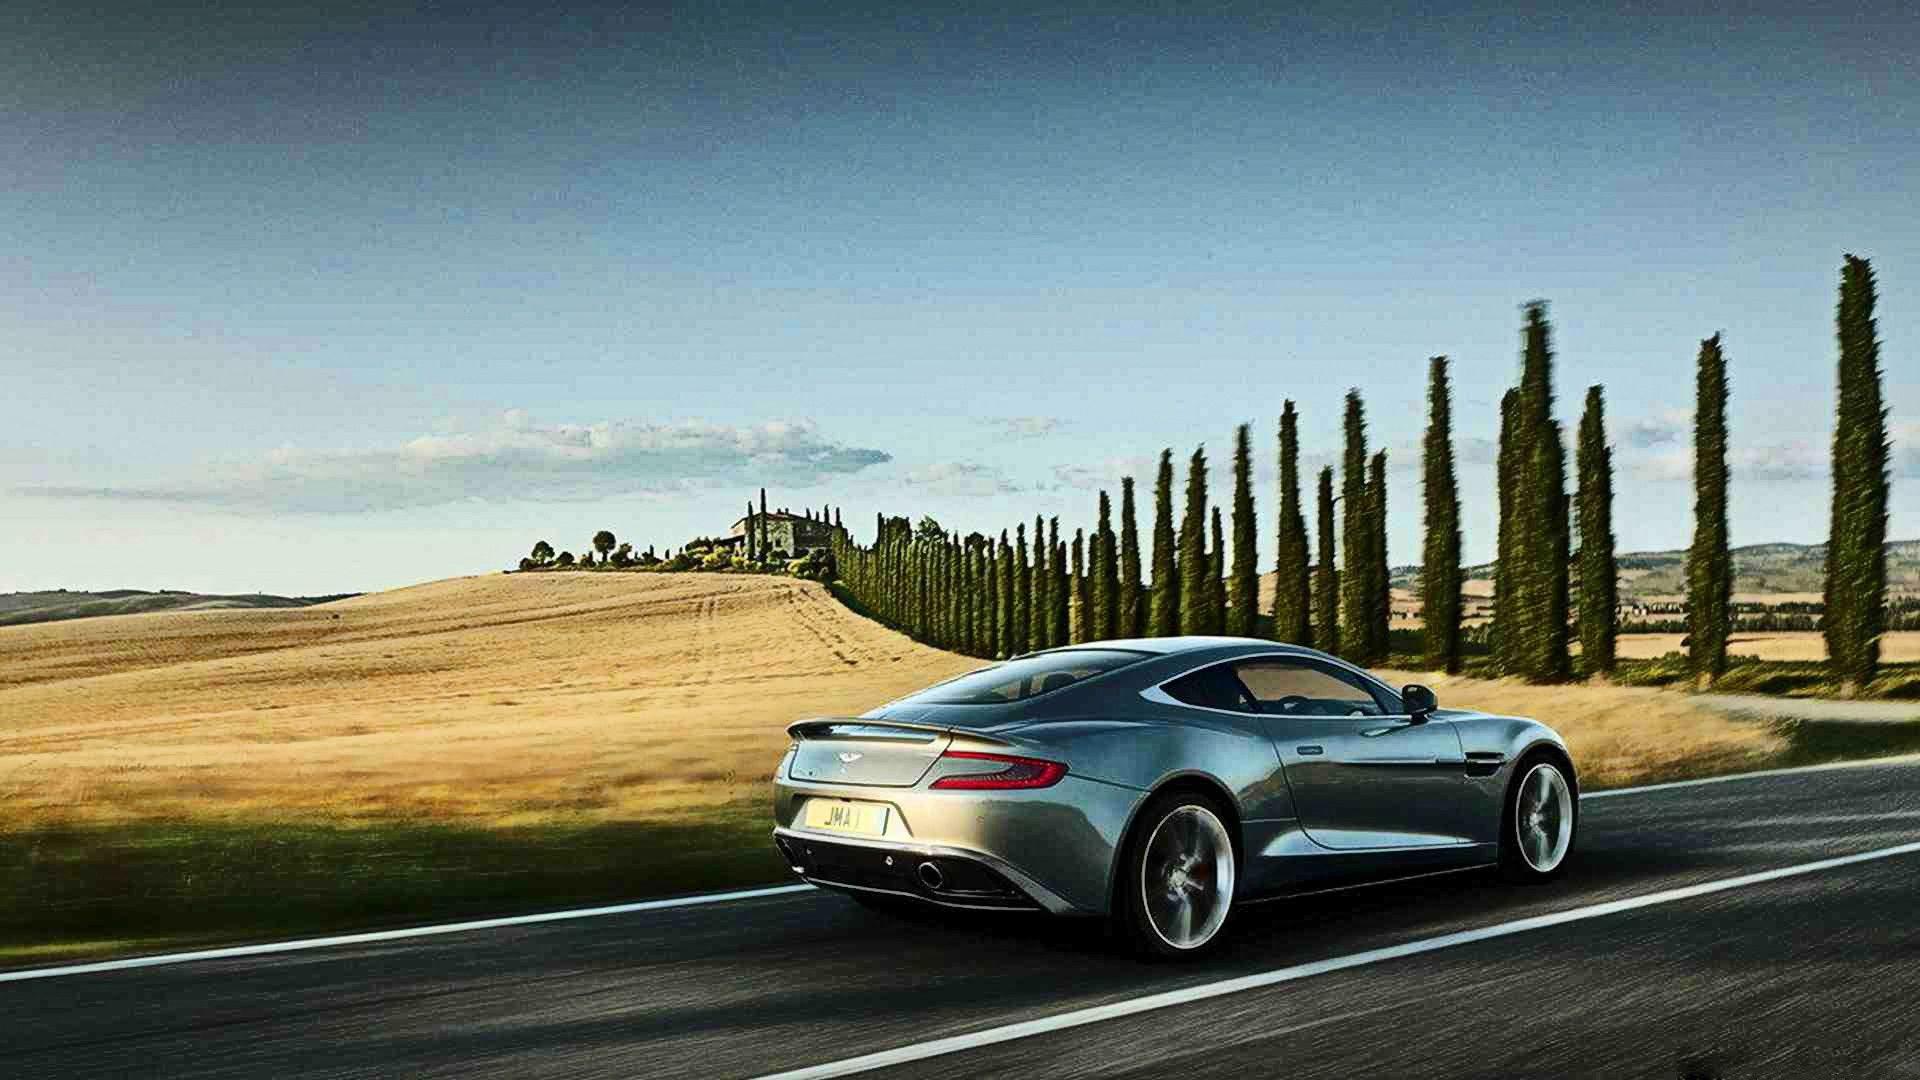 Cars Wallpaper: Charming Aston Martin Vanquish Wallpaper Background